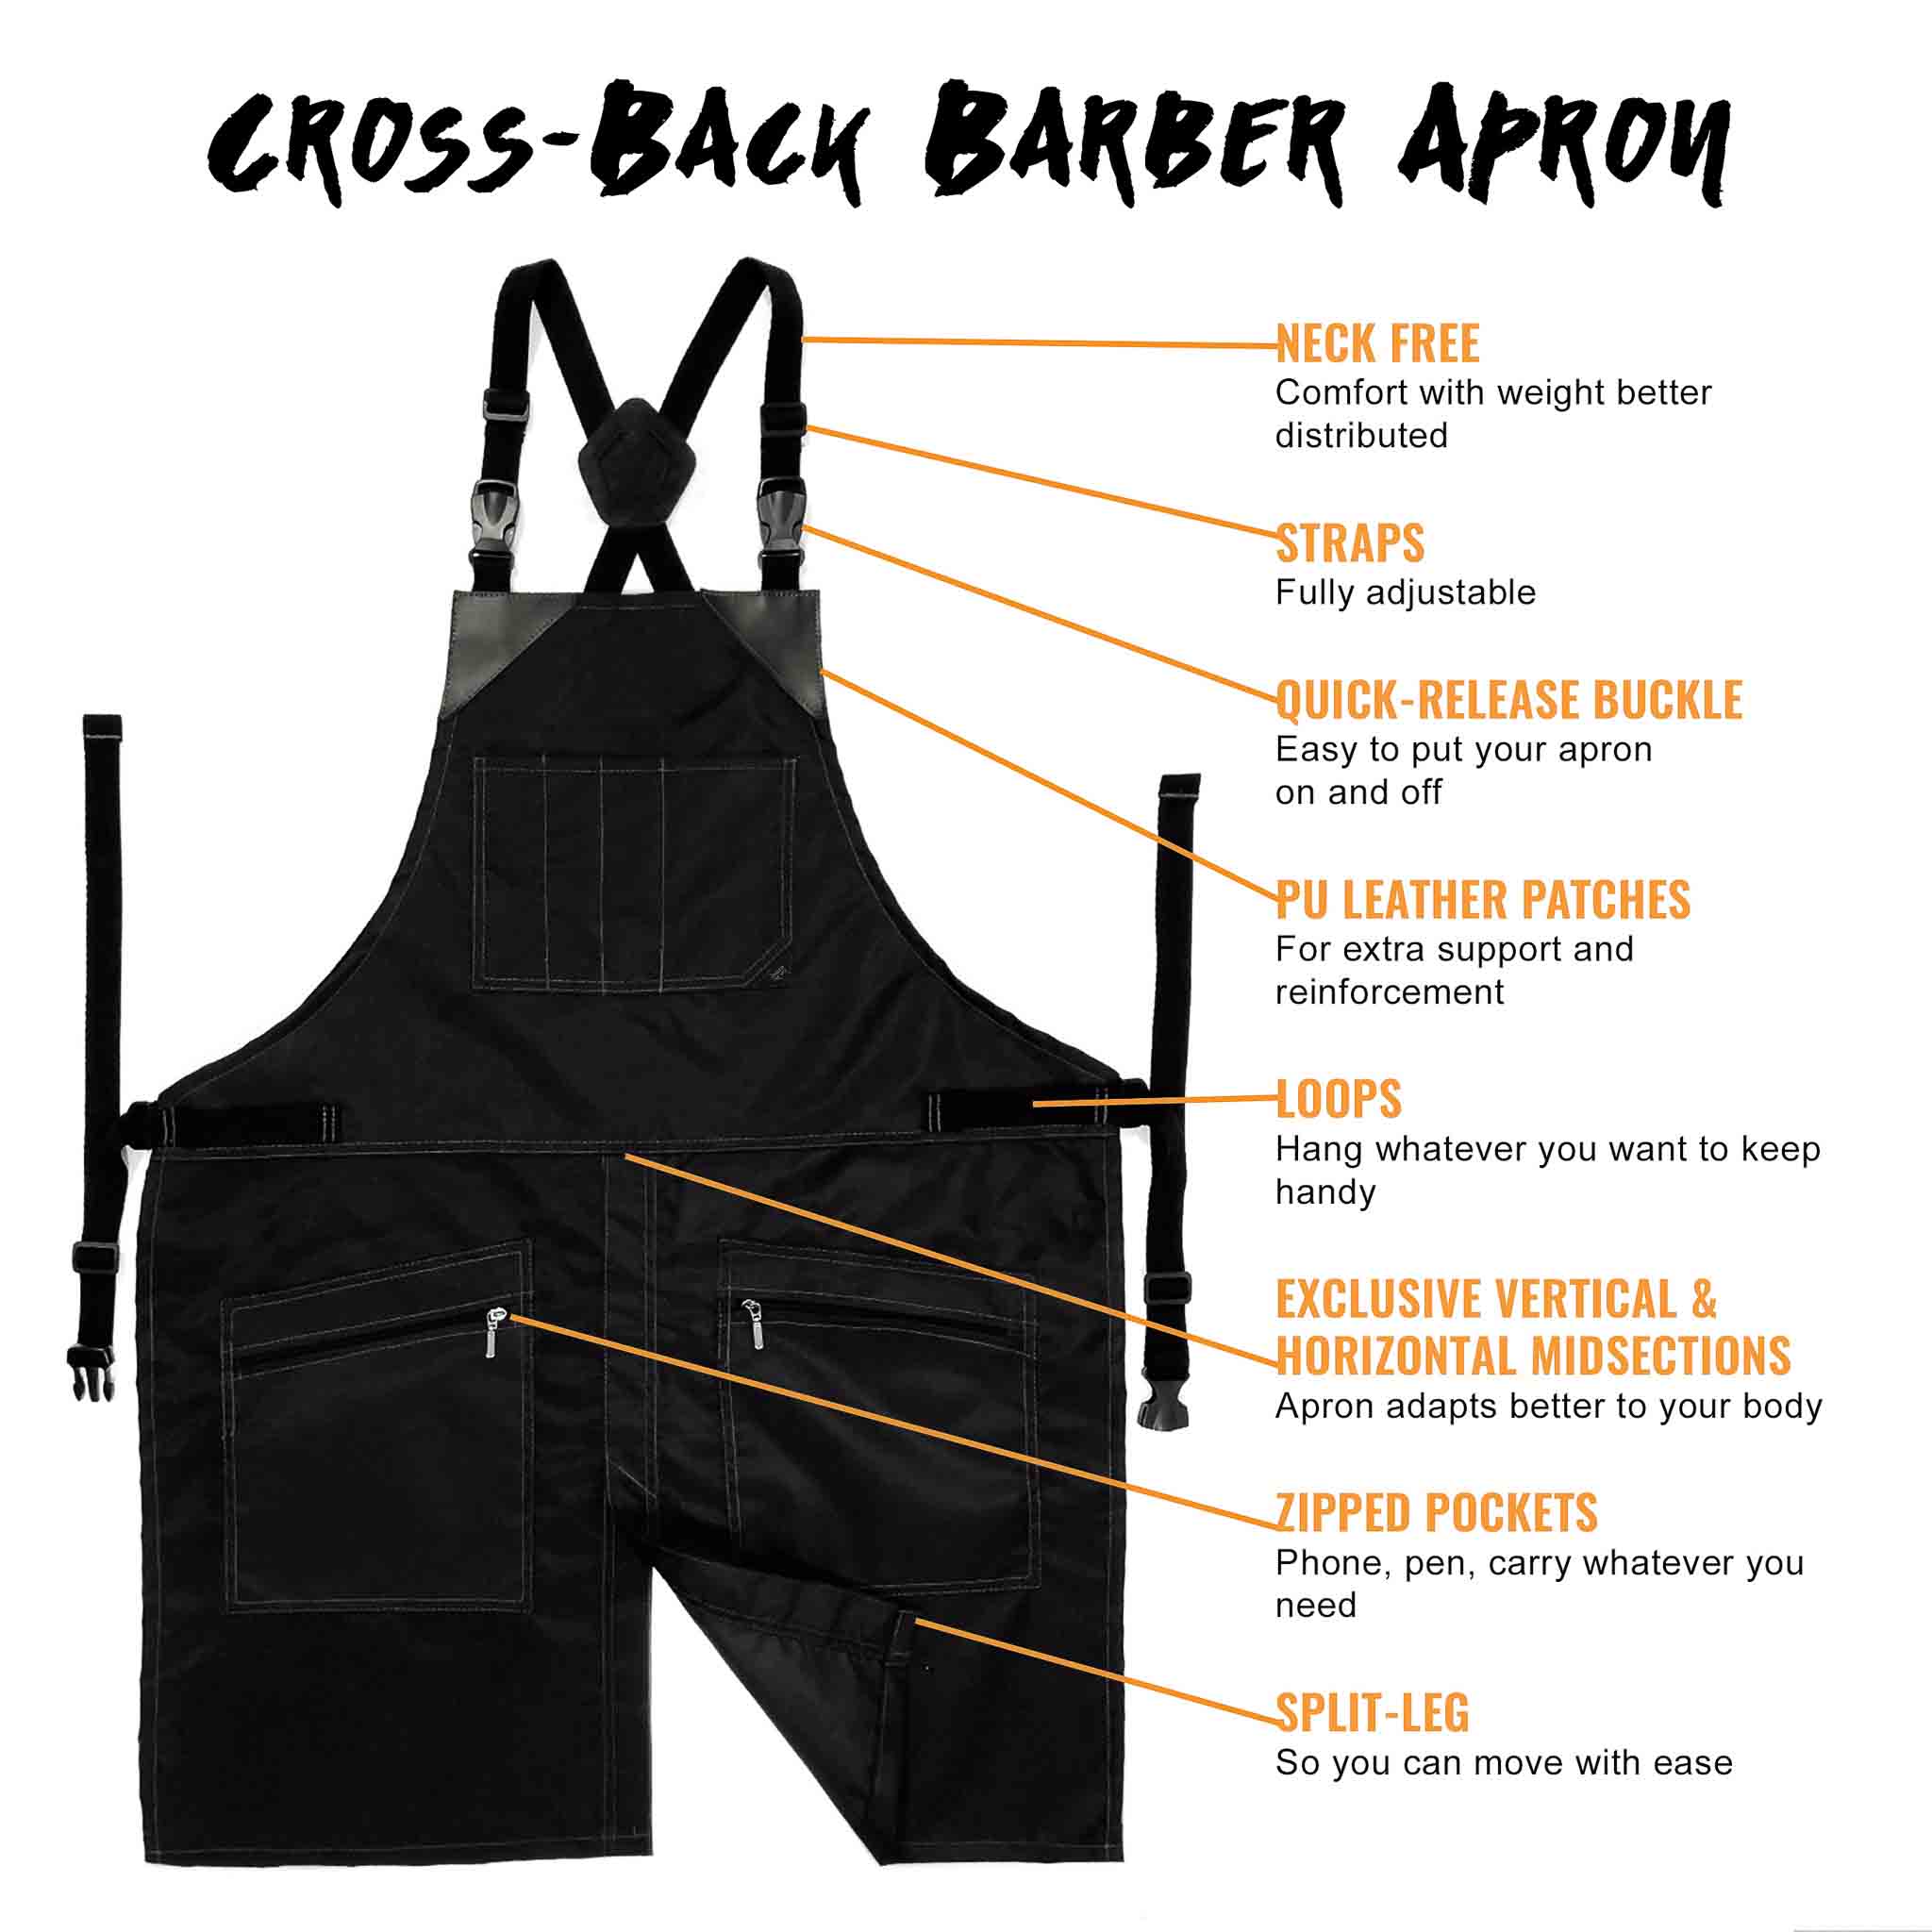 Barber Apron - Water & Chemical Proof, CrossBack, Zip Pocket